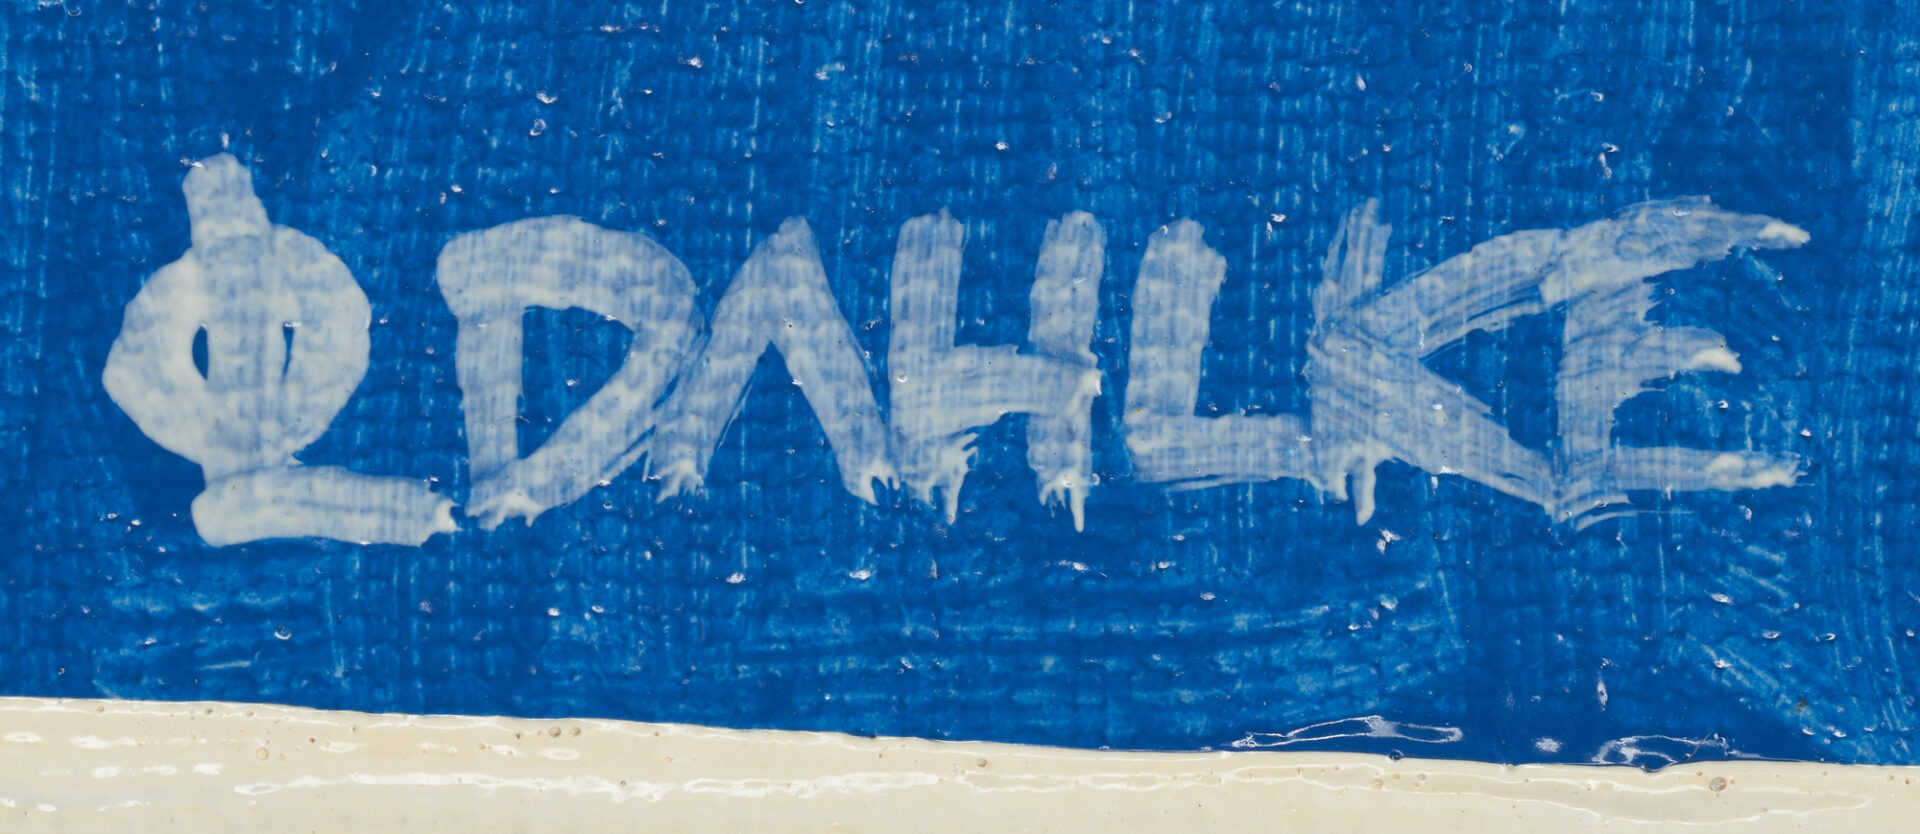 Lot 862: Don Dahlke O/C Caribbean Painting, Hot Dog Vendor